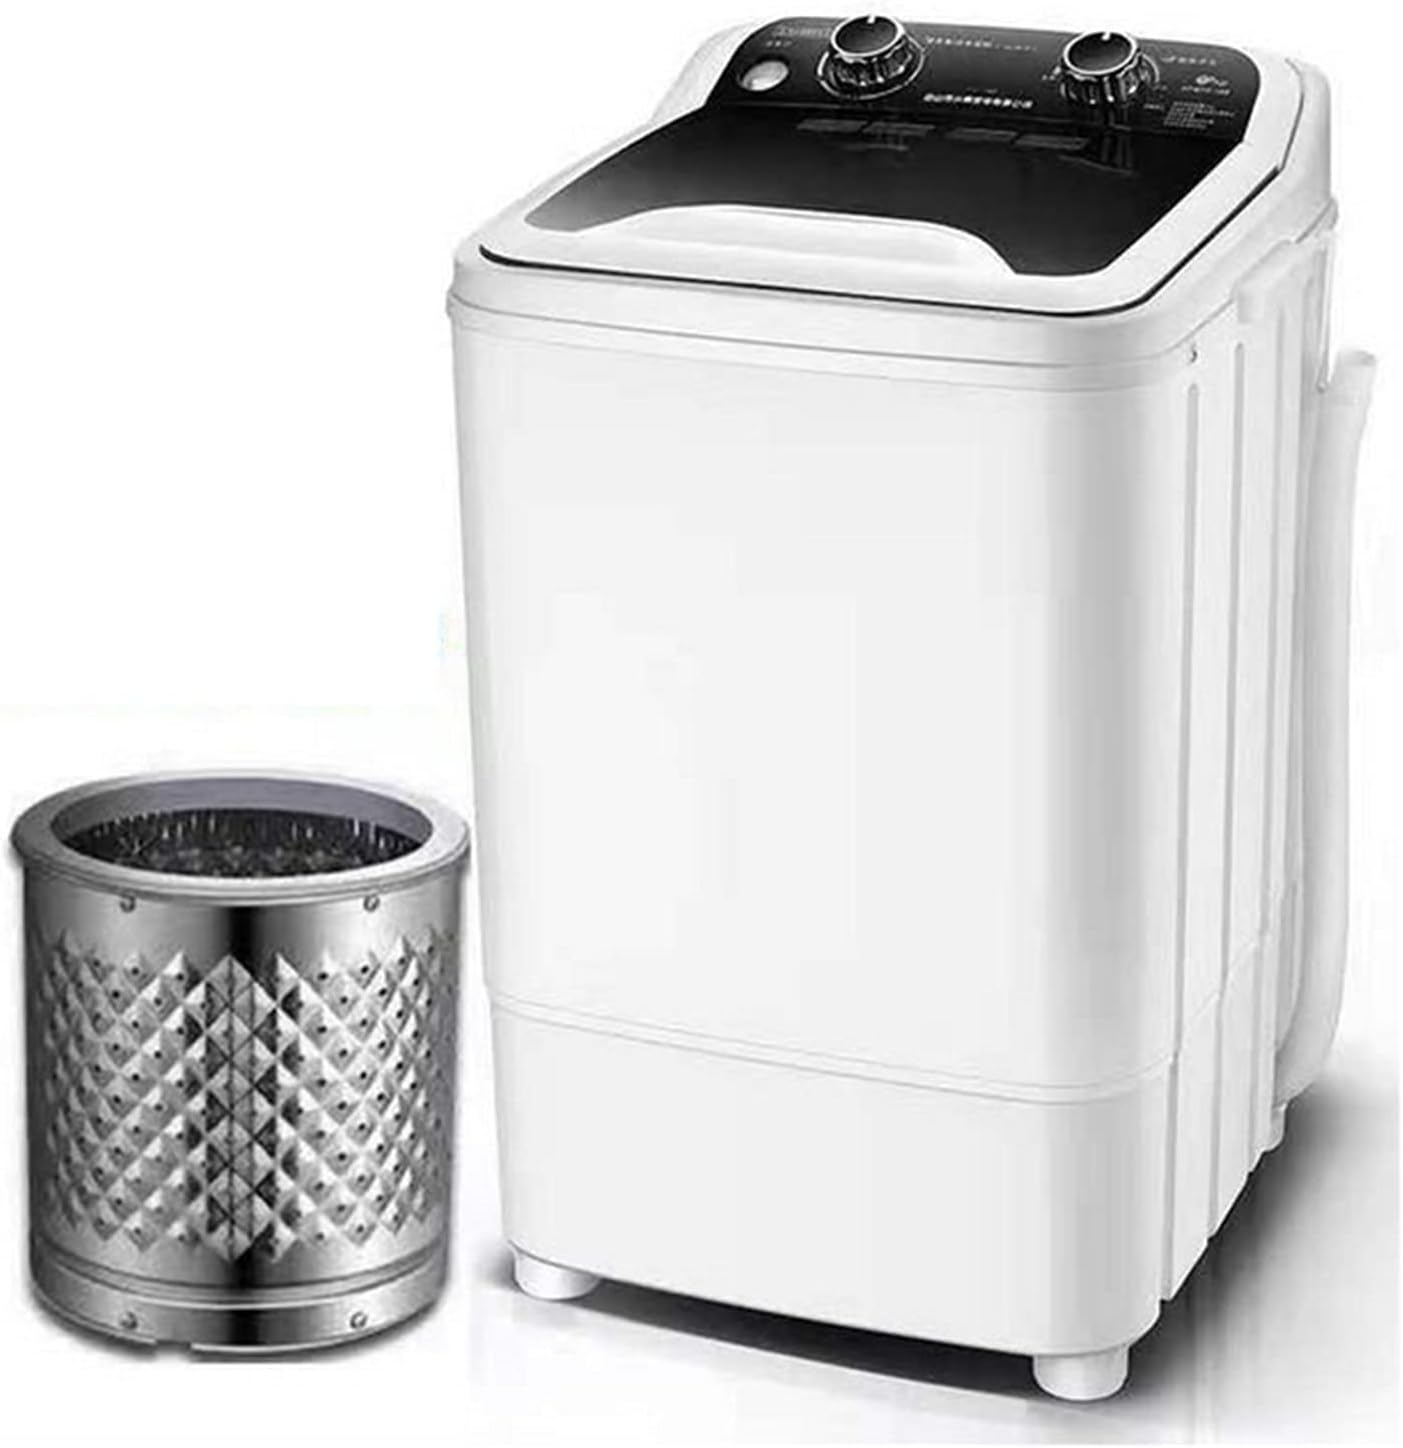 AMAZOM Portable Washing Machine Review